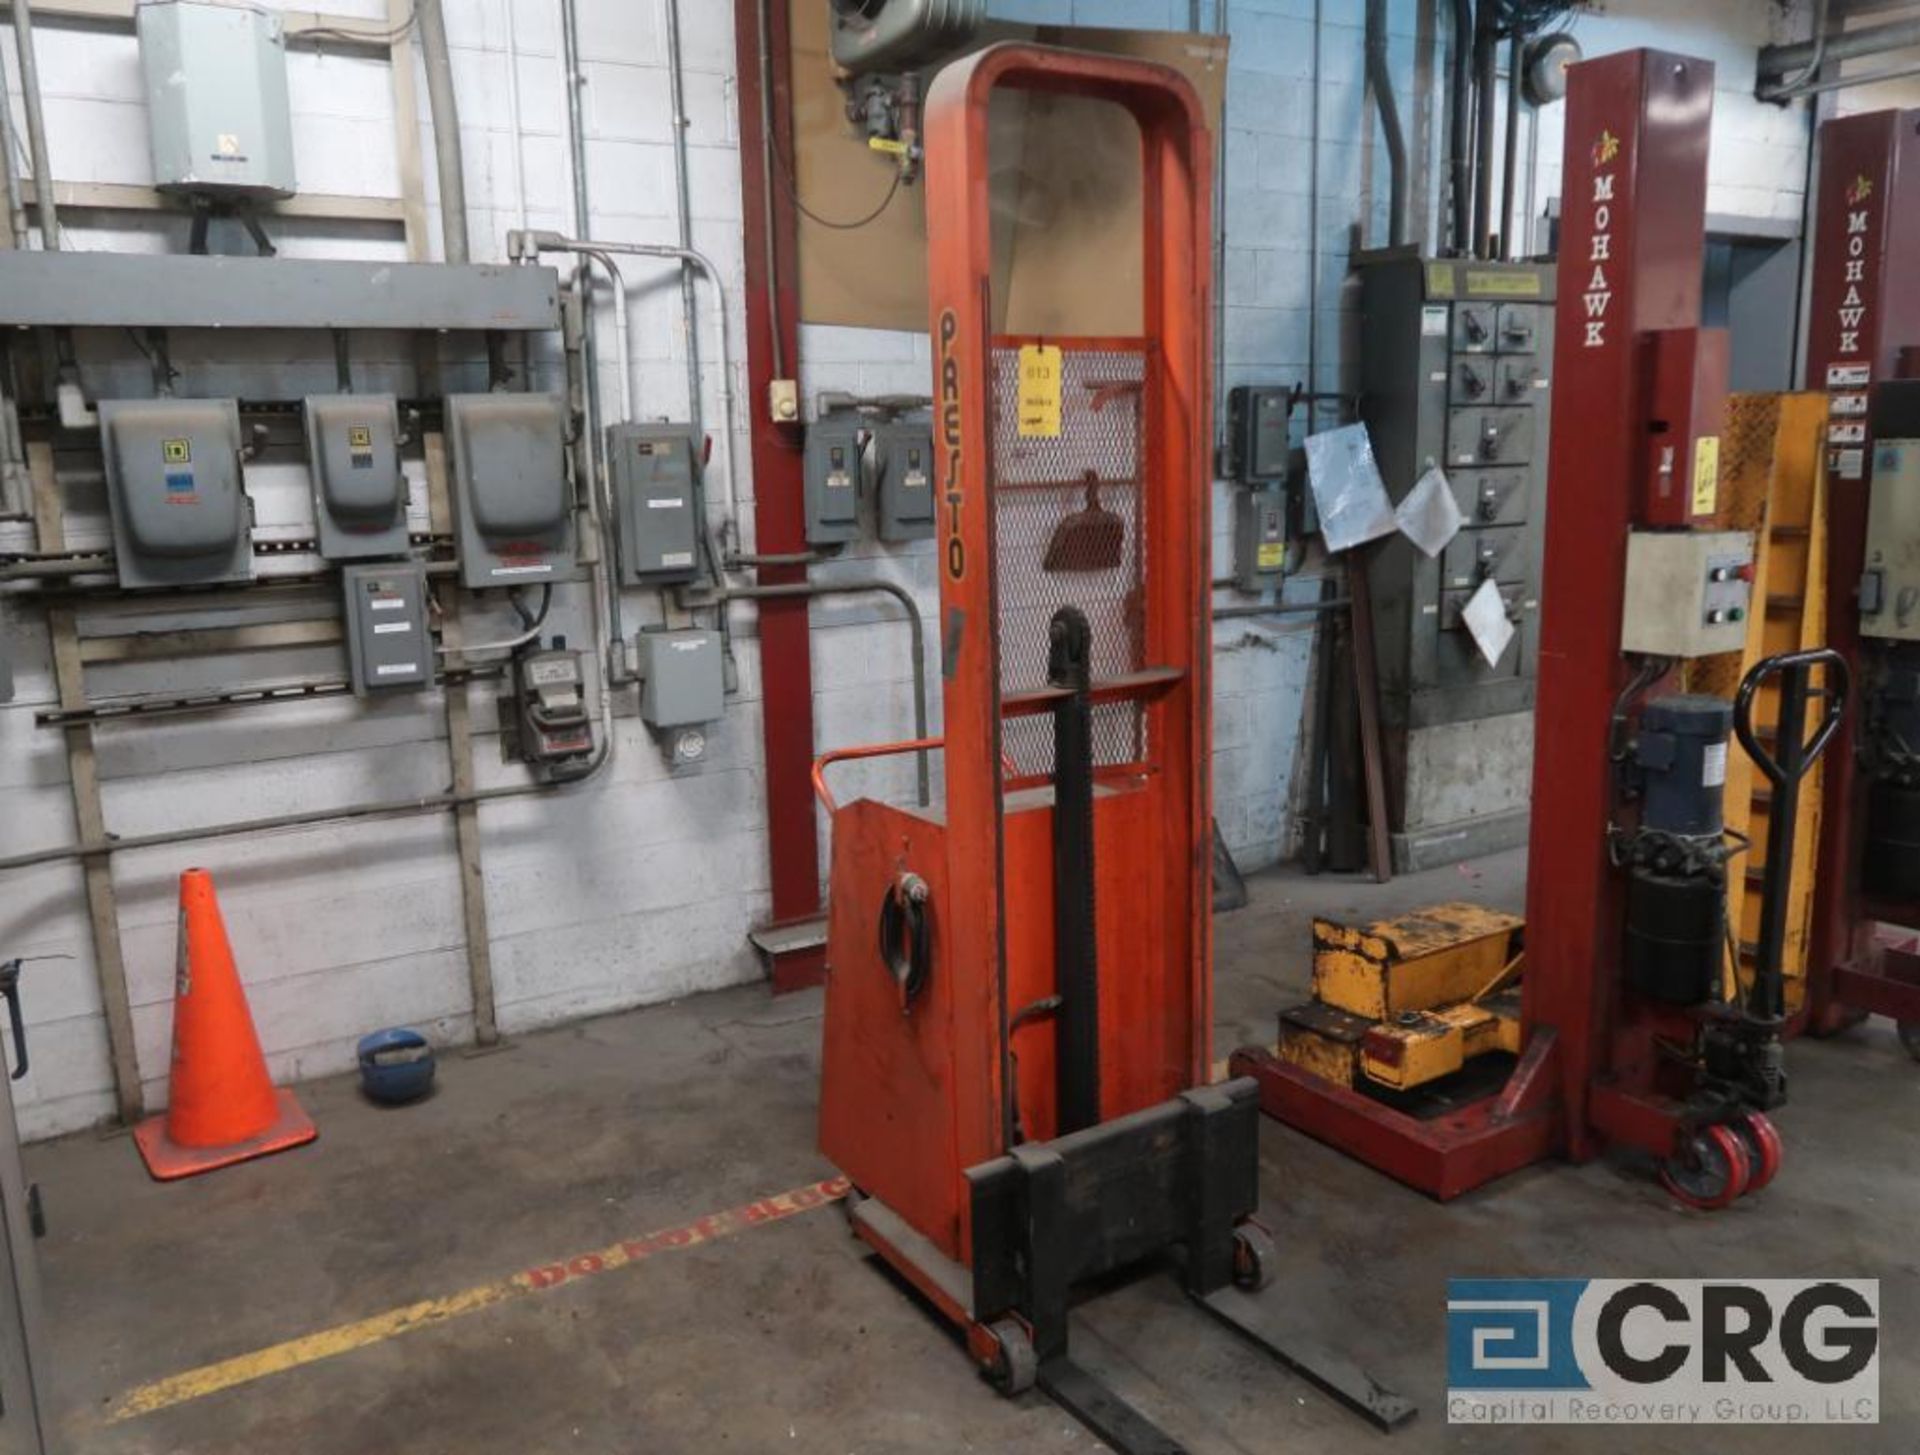 Presto Lift C74 hydraulic lift, 1,000 lb. cap., on board charger, s/n 0385 (Forklift Shop)